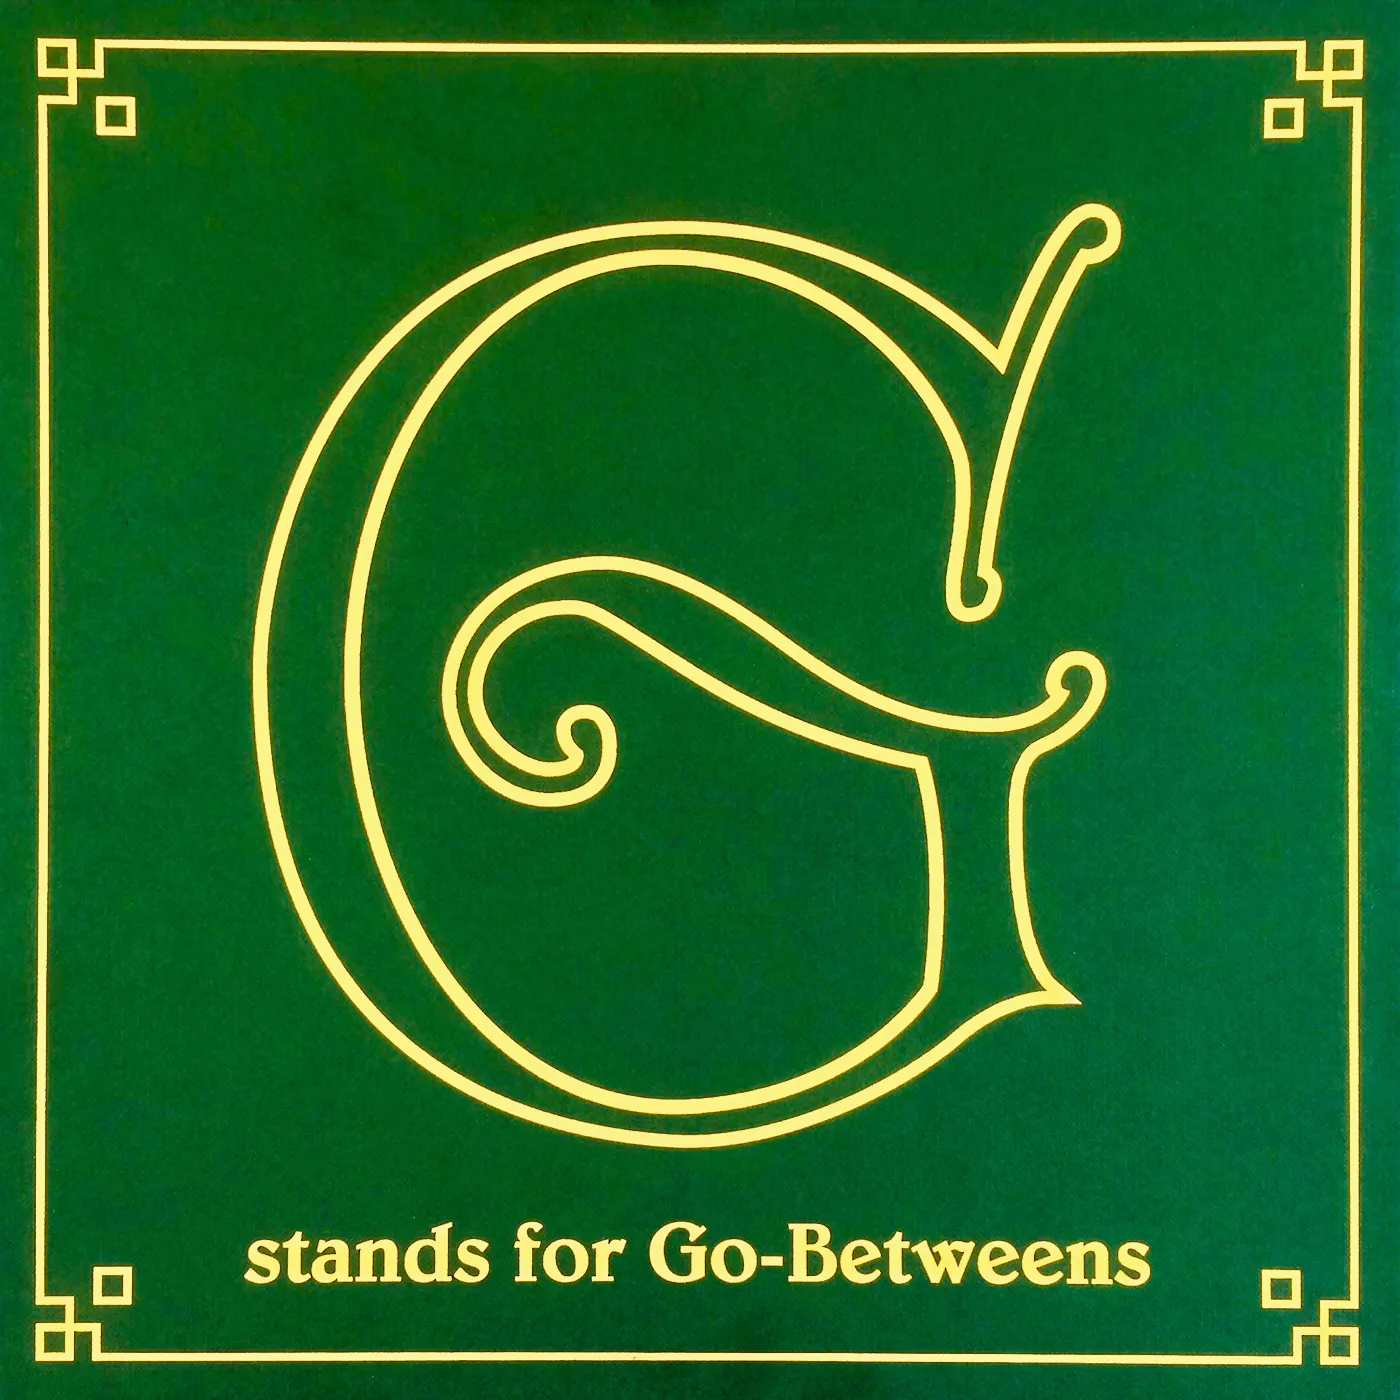 The Go-Betweens – G Stands For Go-Betweens